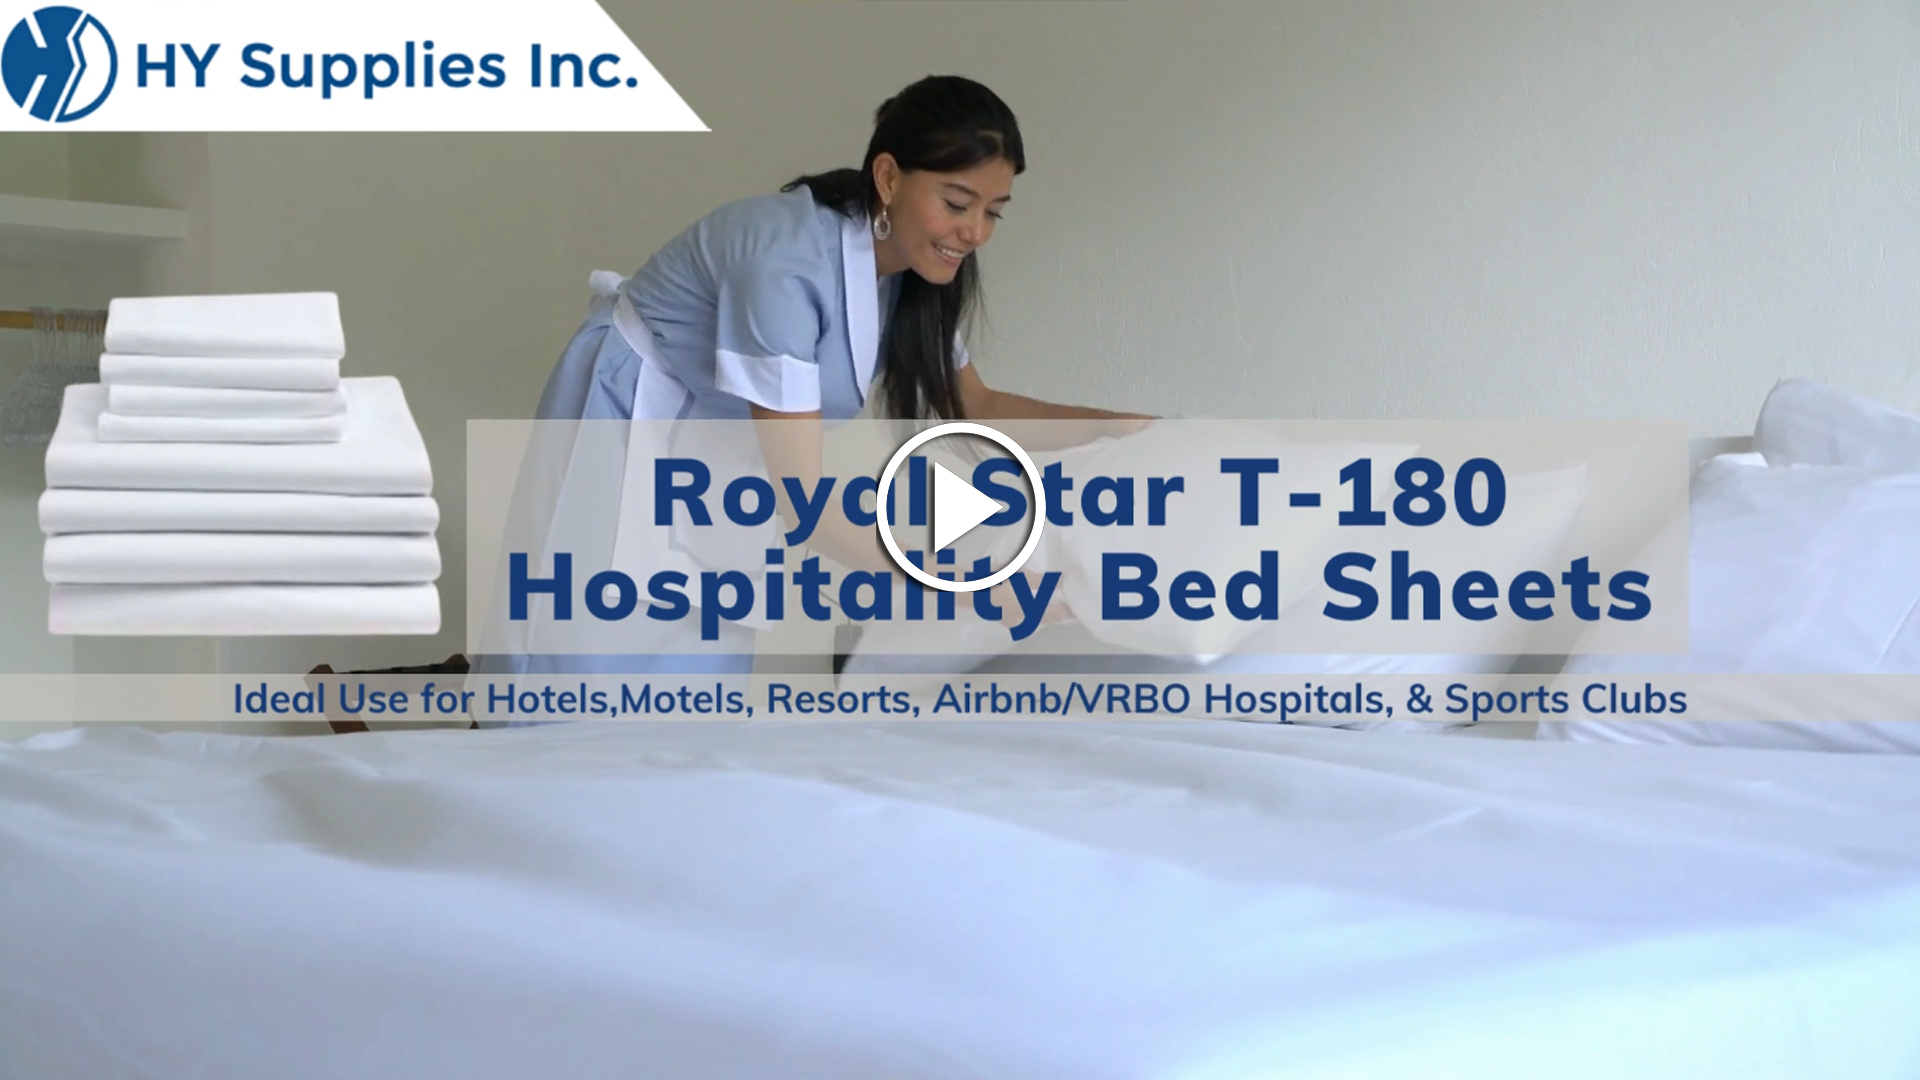 Royal Star T-180 Hospitality Bed Sheets